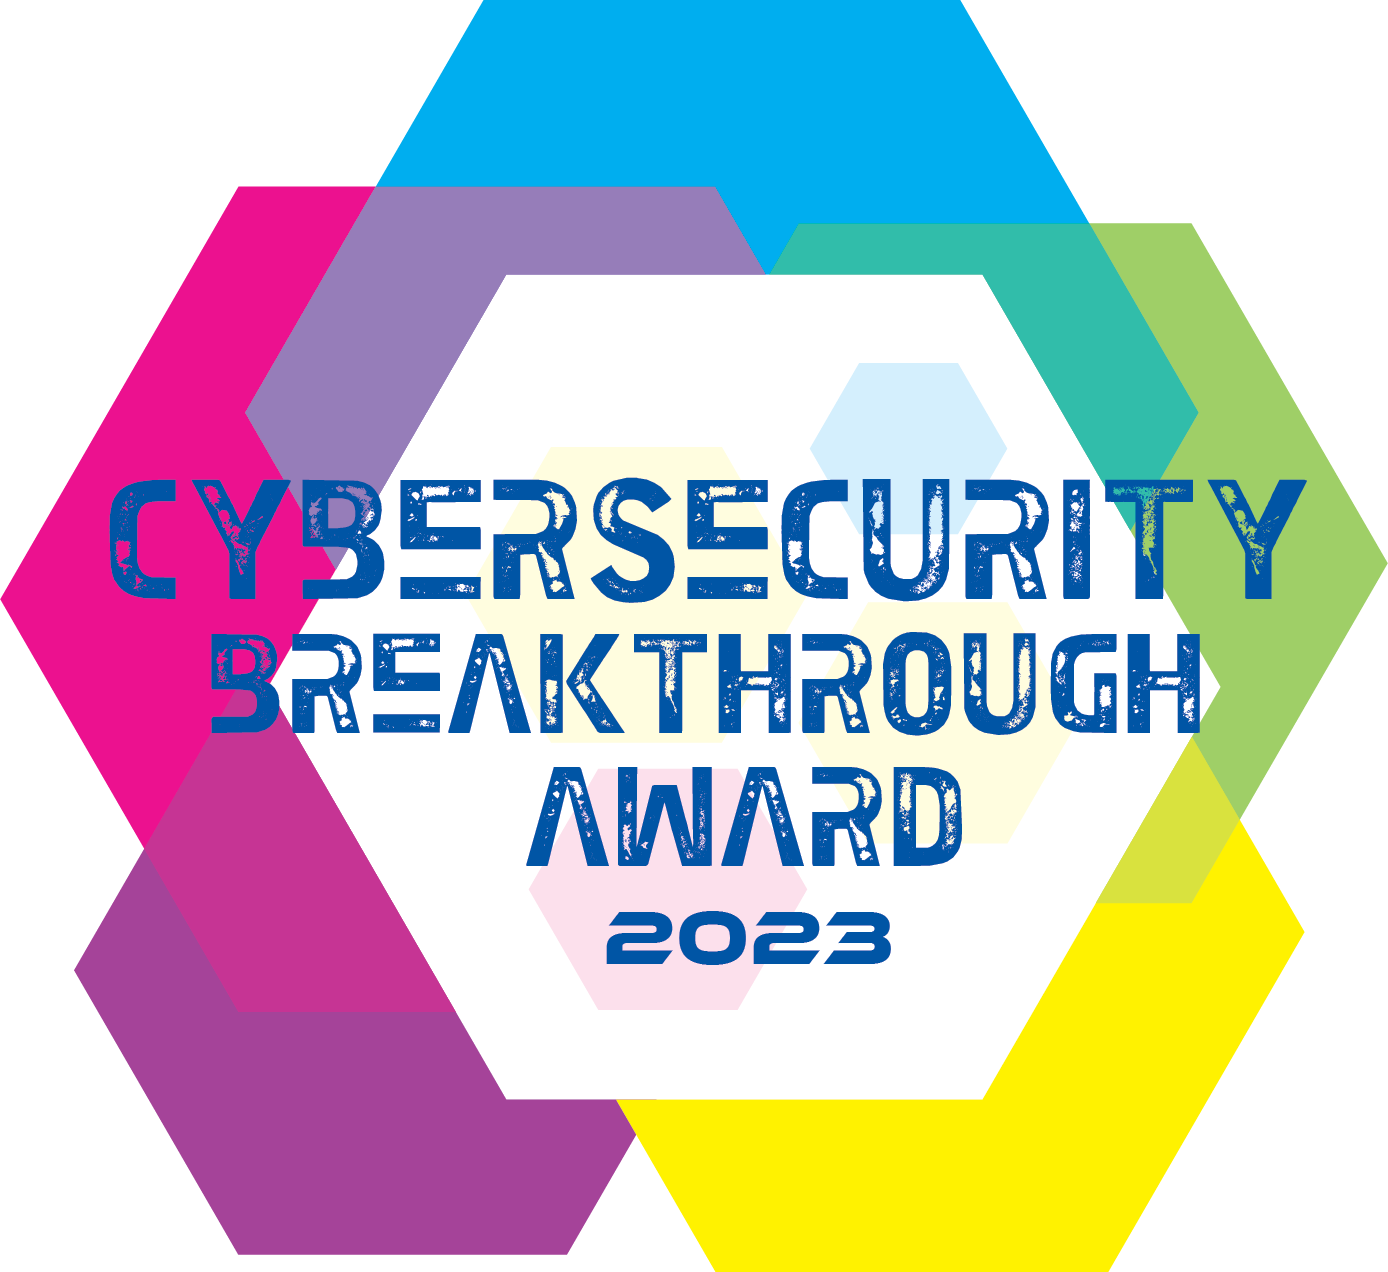 Cybersecurity breakthrough award 2023